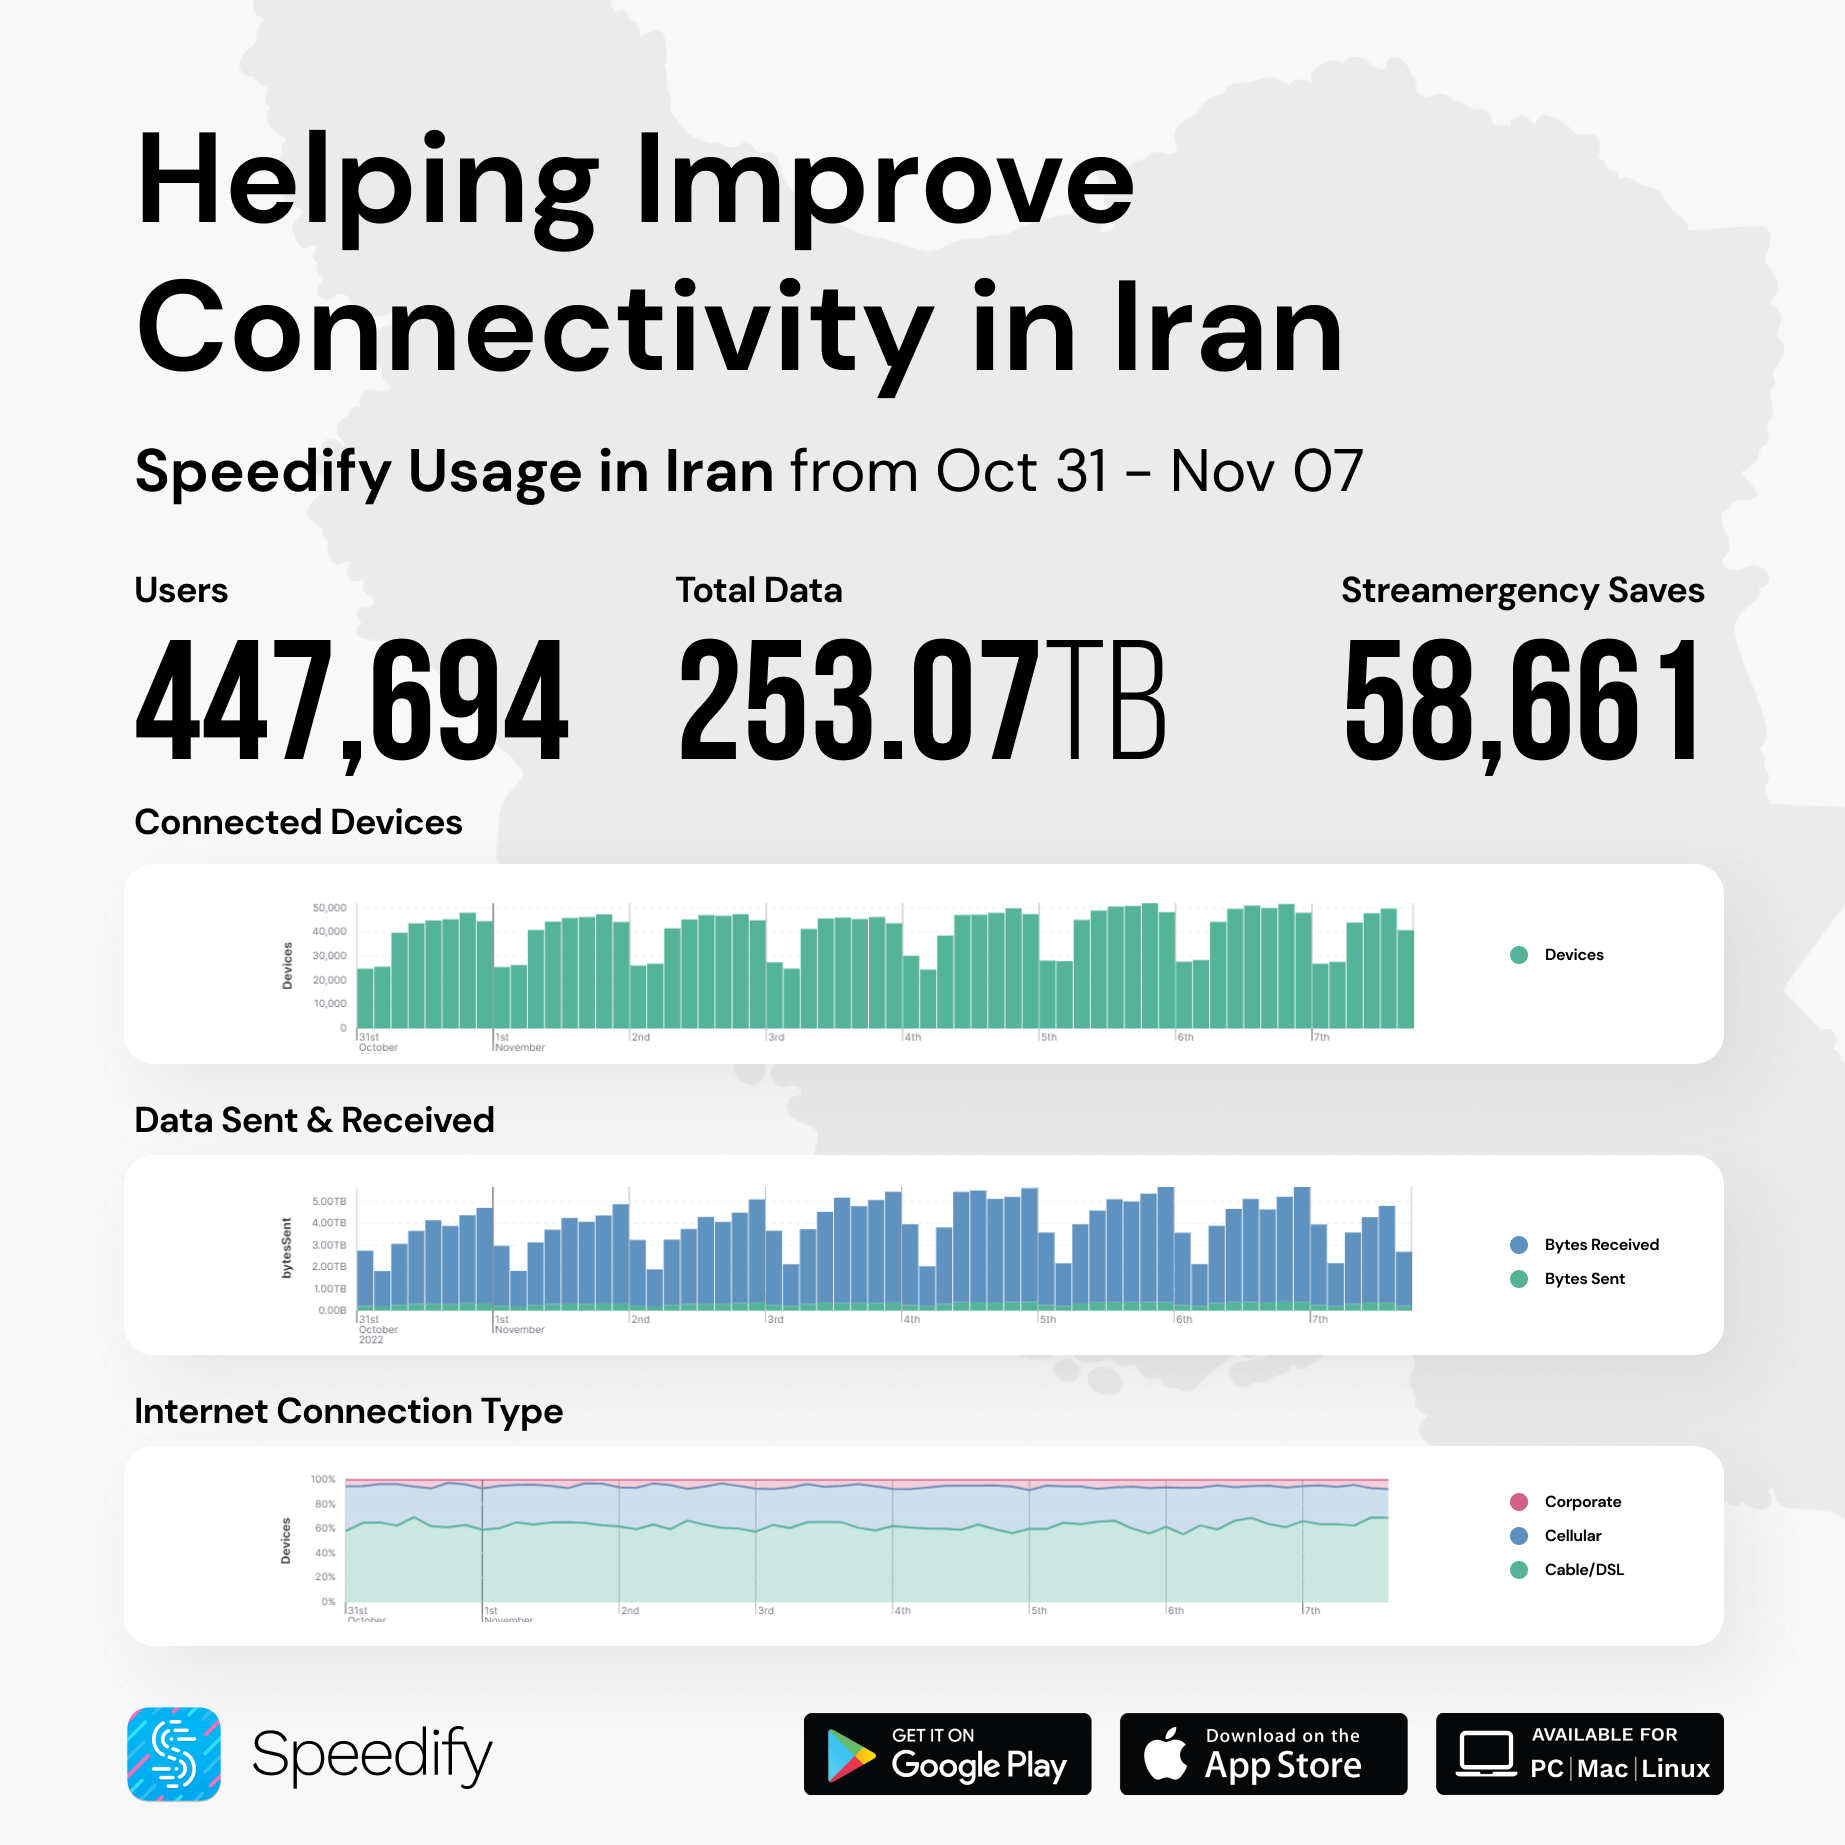 Nov 7 - Iran Internet usage for Speedify users